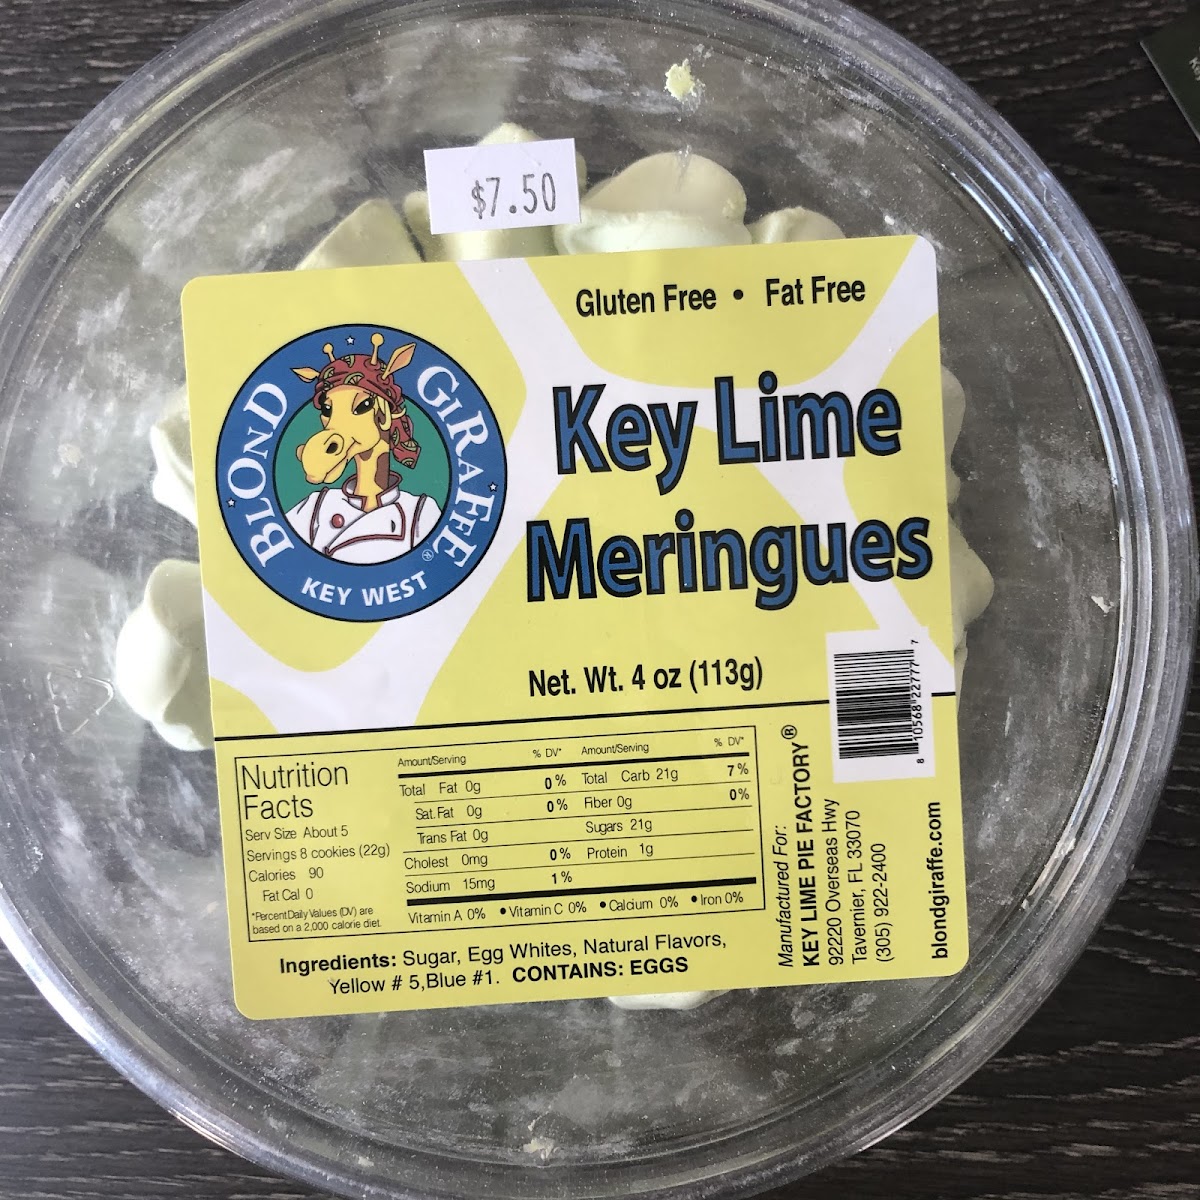 Gluten free key lime meringues